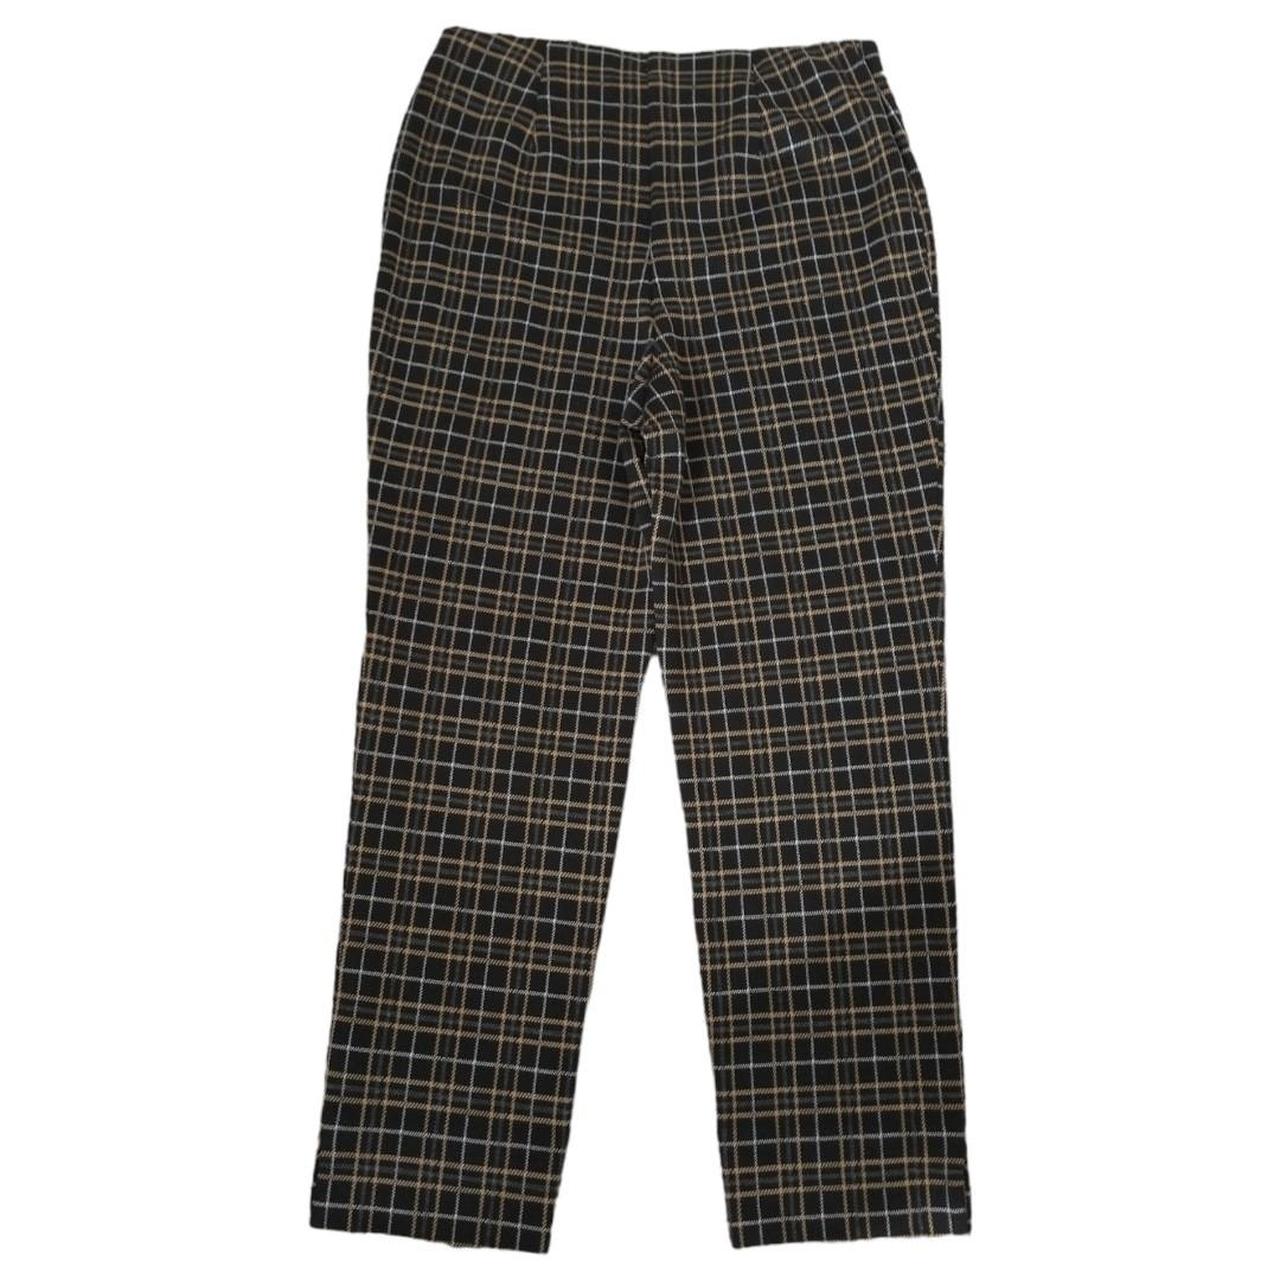 J-Jill Ponte Slim Pants Women Gray Slack Petite Medium – The Kennedy  Collective